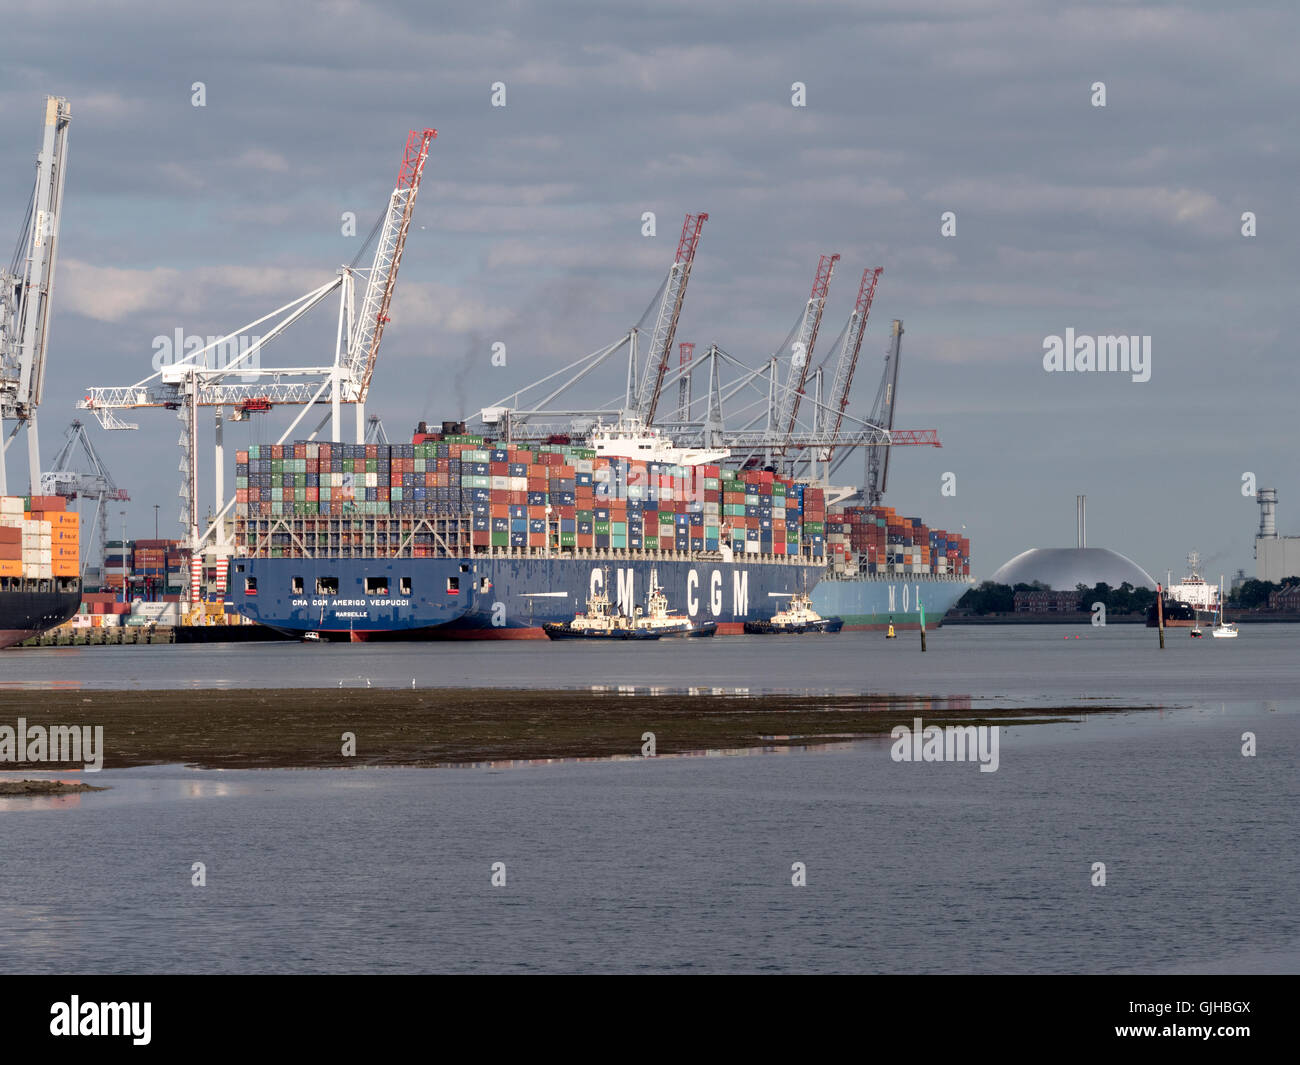 CMA CGM Amerigo Vespucci, Containerschiff, Andocken am Containerhafen, Southampton Docks, Southampton, Hampshire, England, UK. Stockfoto